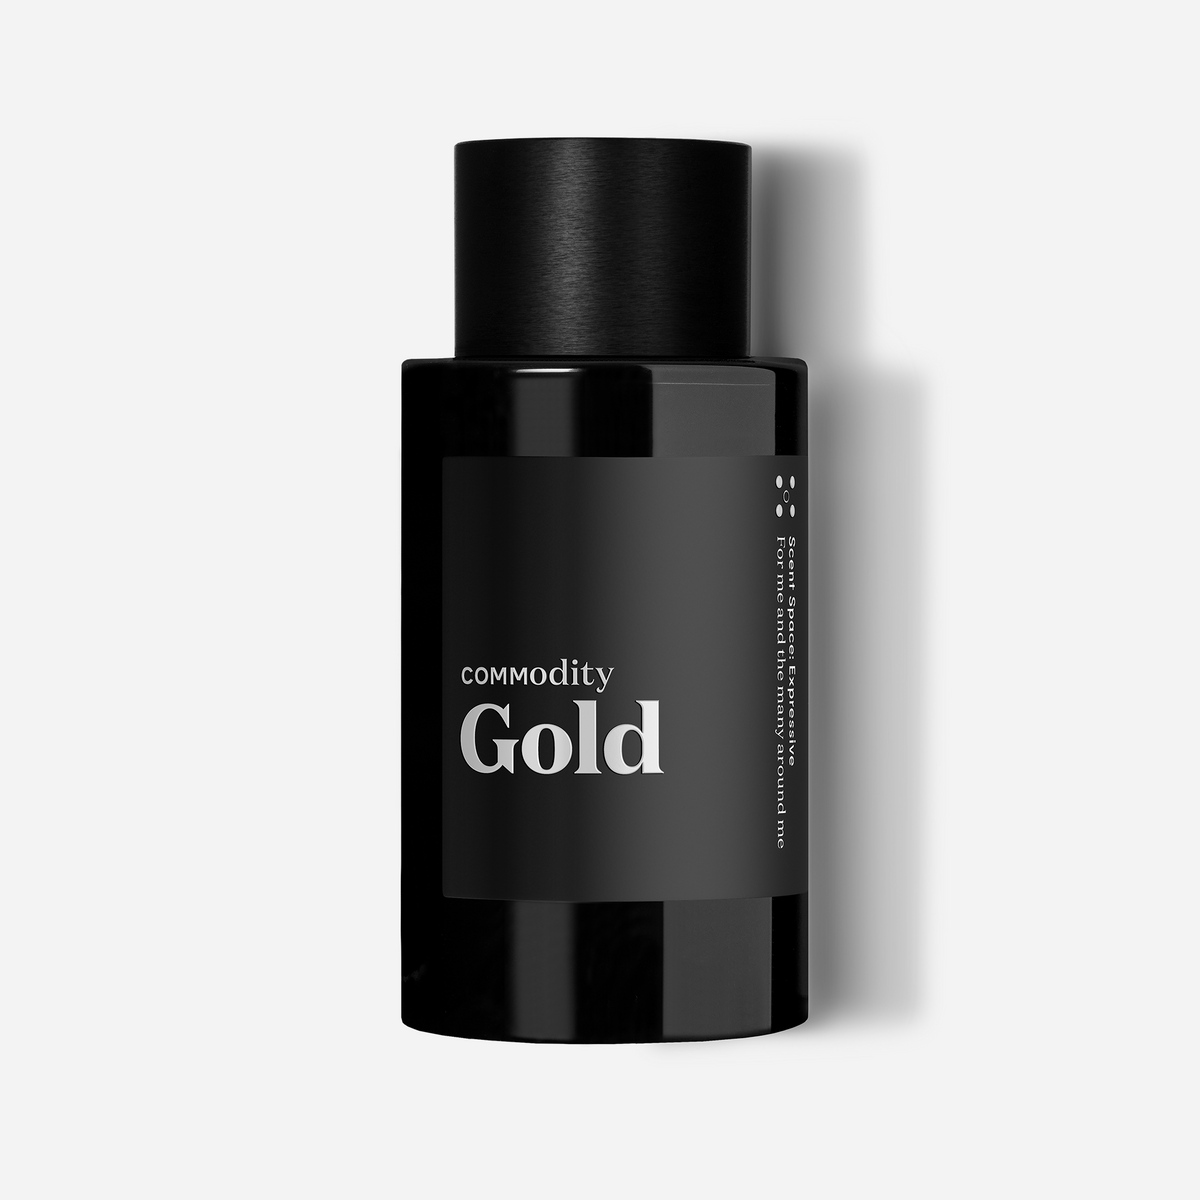 Gold – Commodity Fragrances (US)